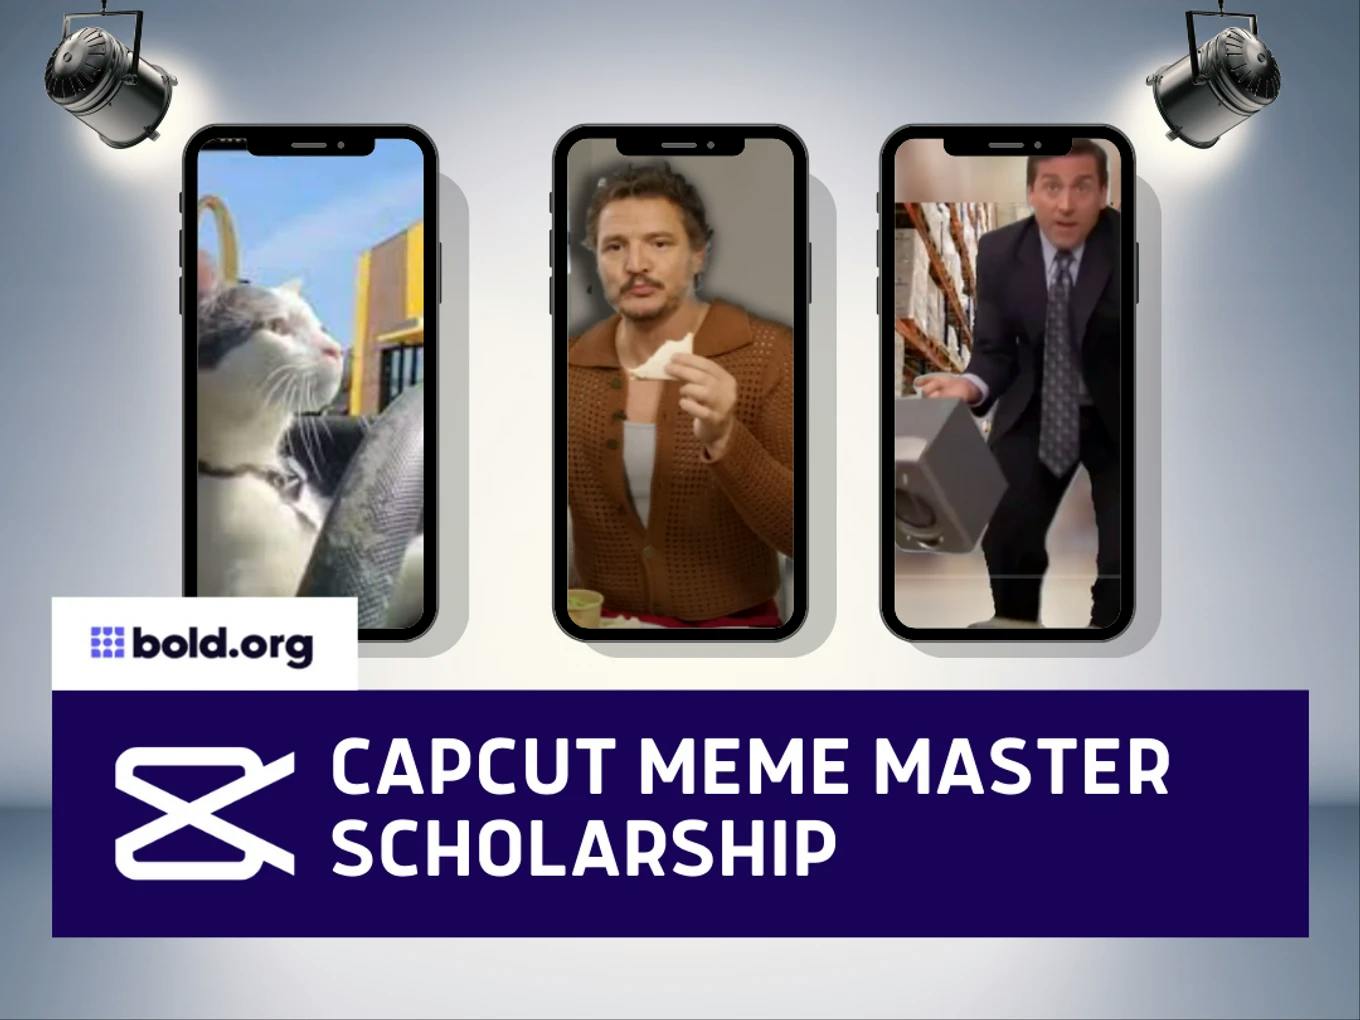 CapCut Meme Master Scholarship